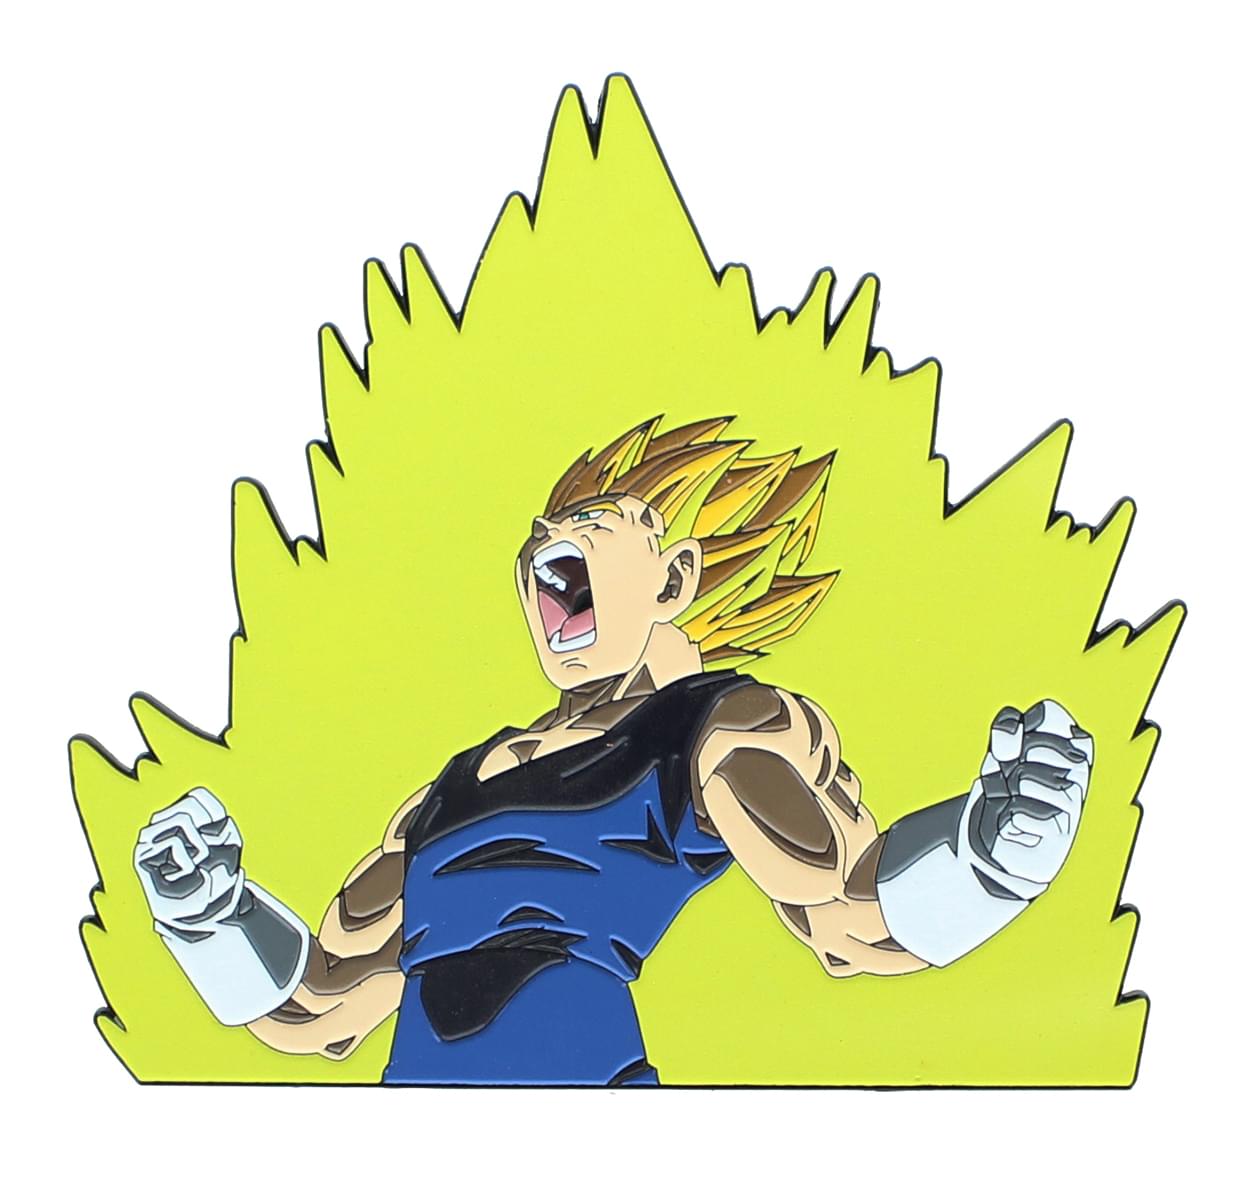 Dragon Ball Z 5.5 Inch Magnetic Pin | Super Saiyan Vegeta